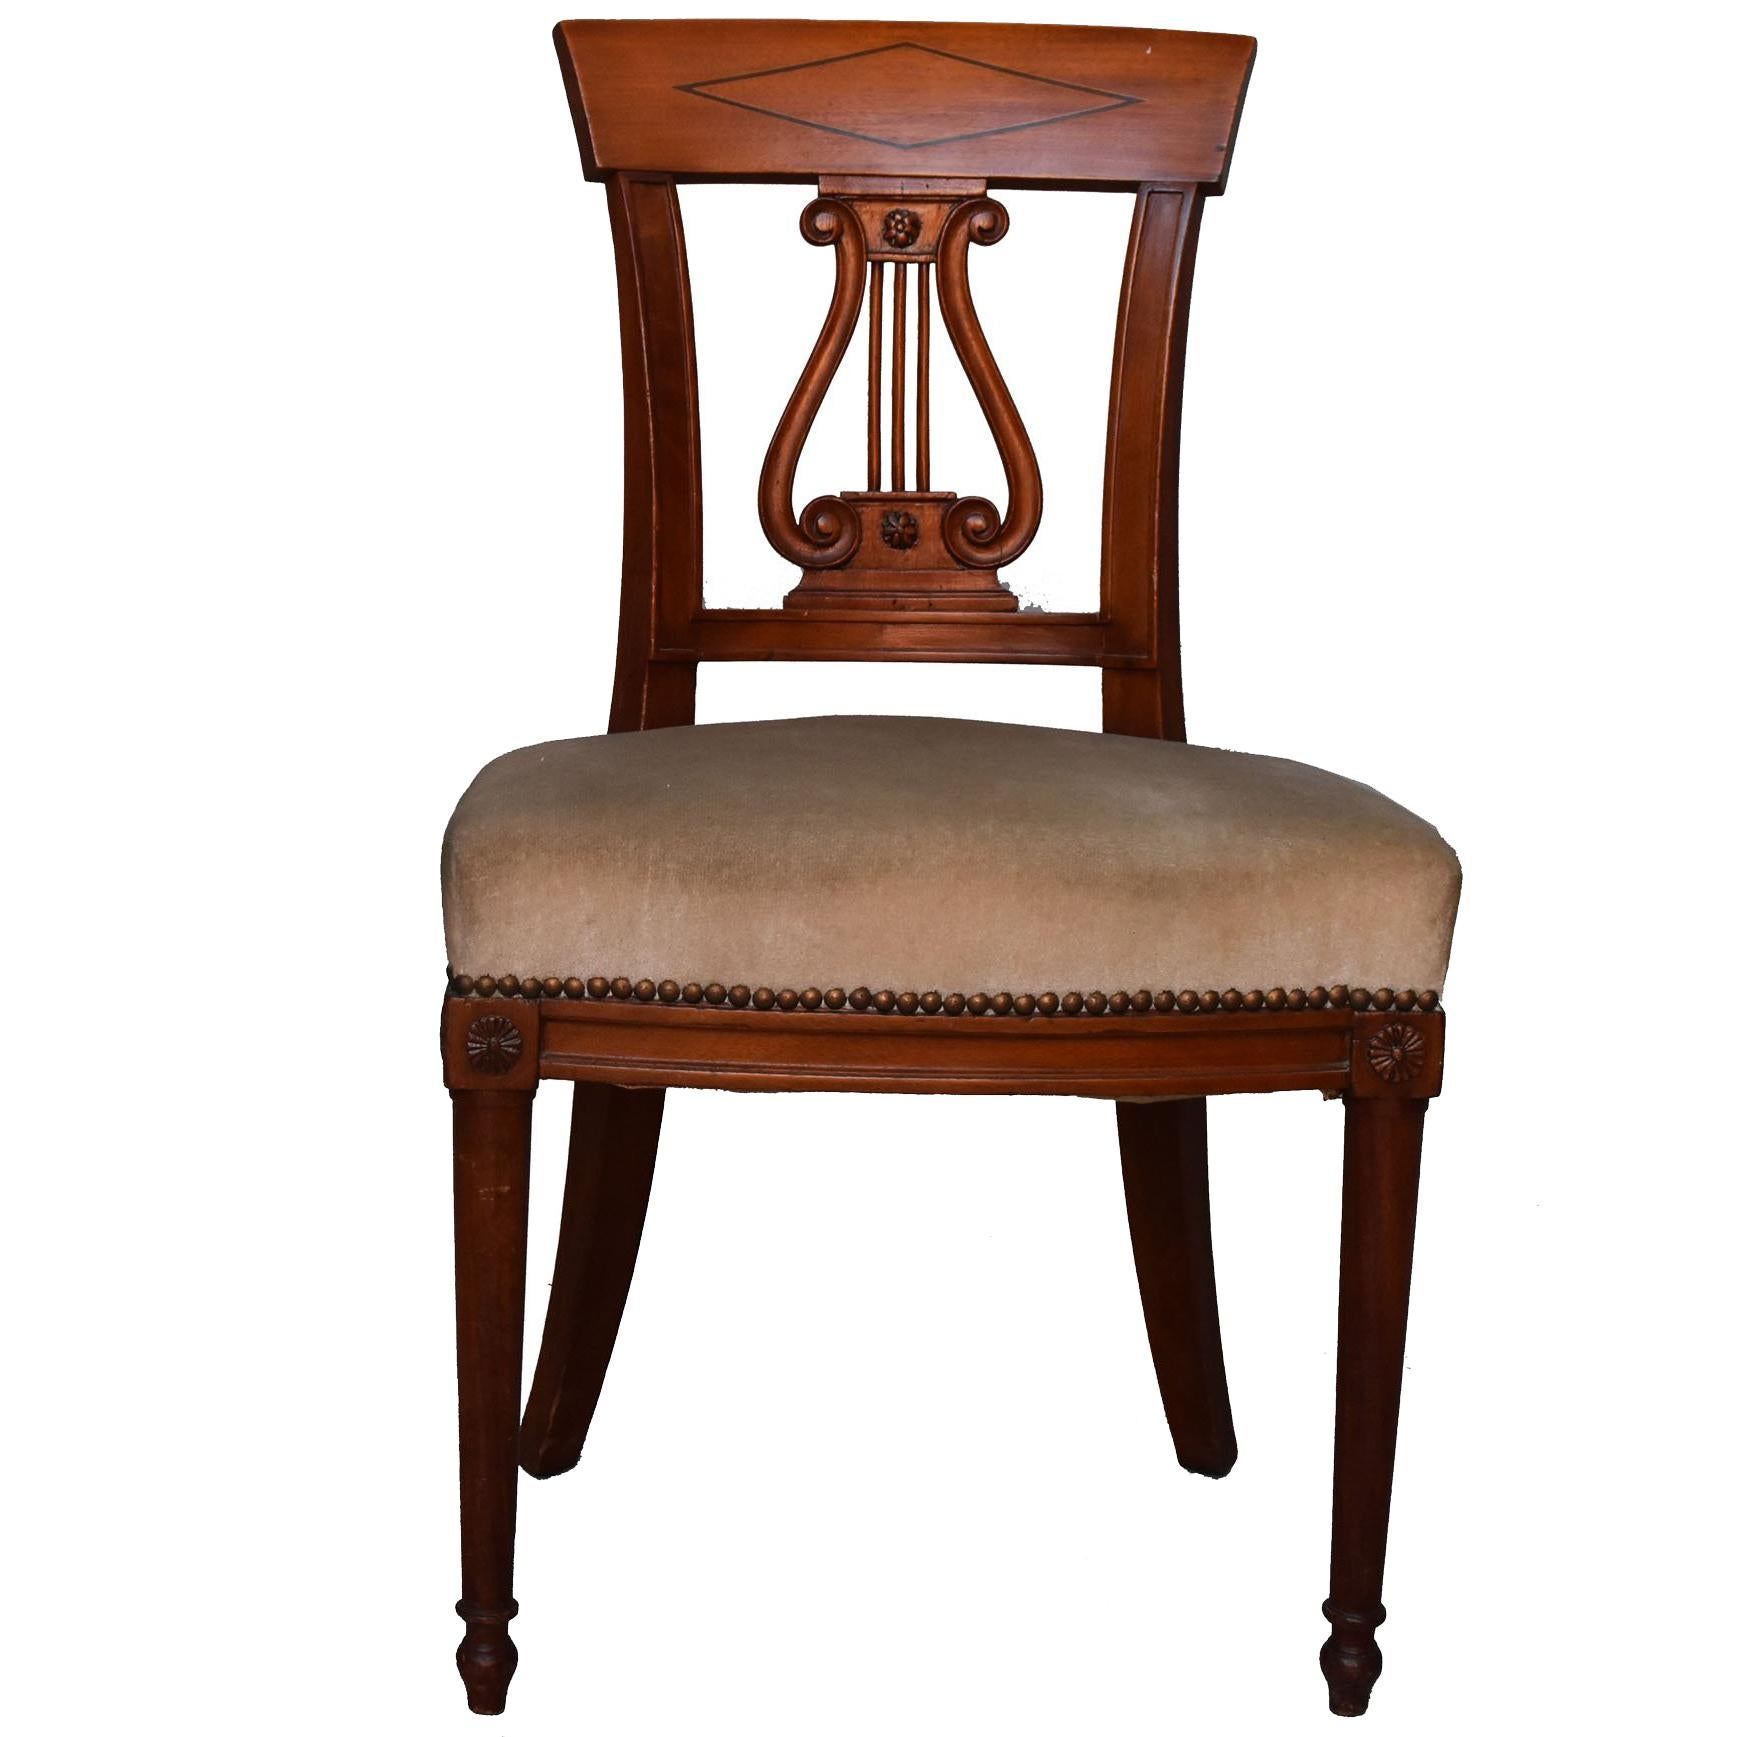 Set of 6 Mahogany Chairs Restauration Style